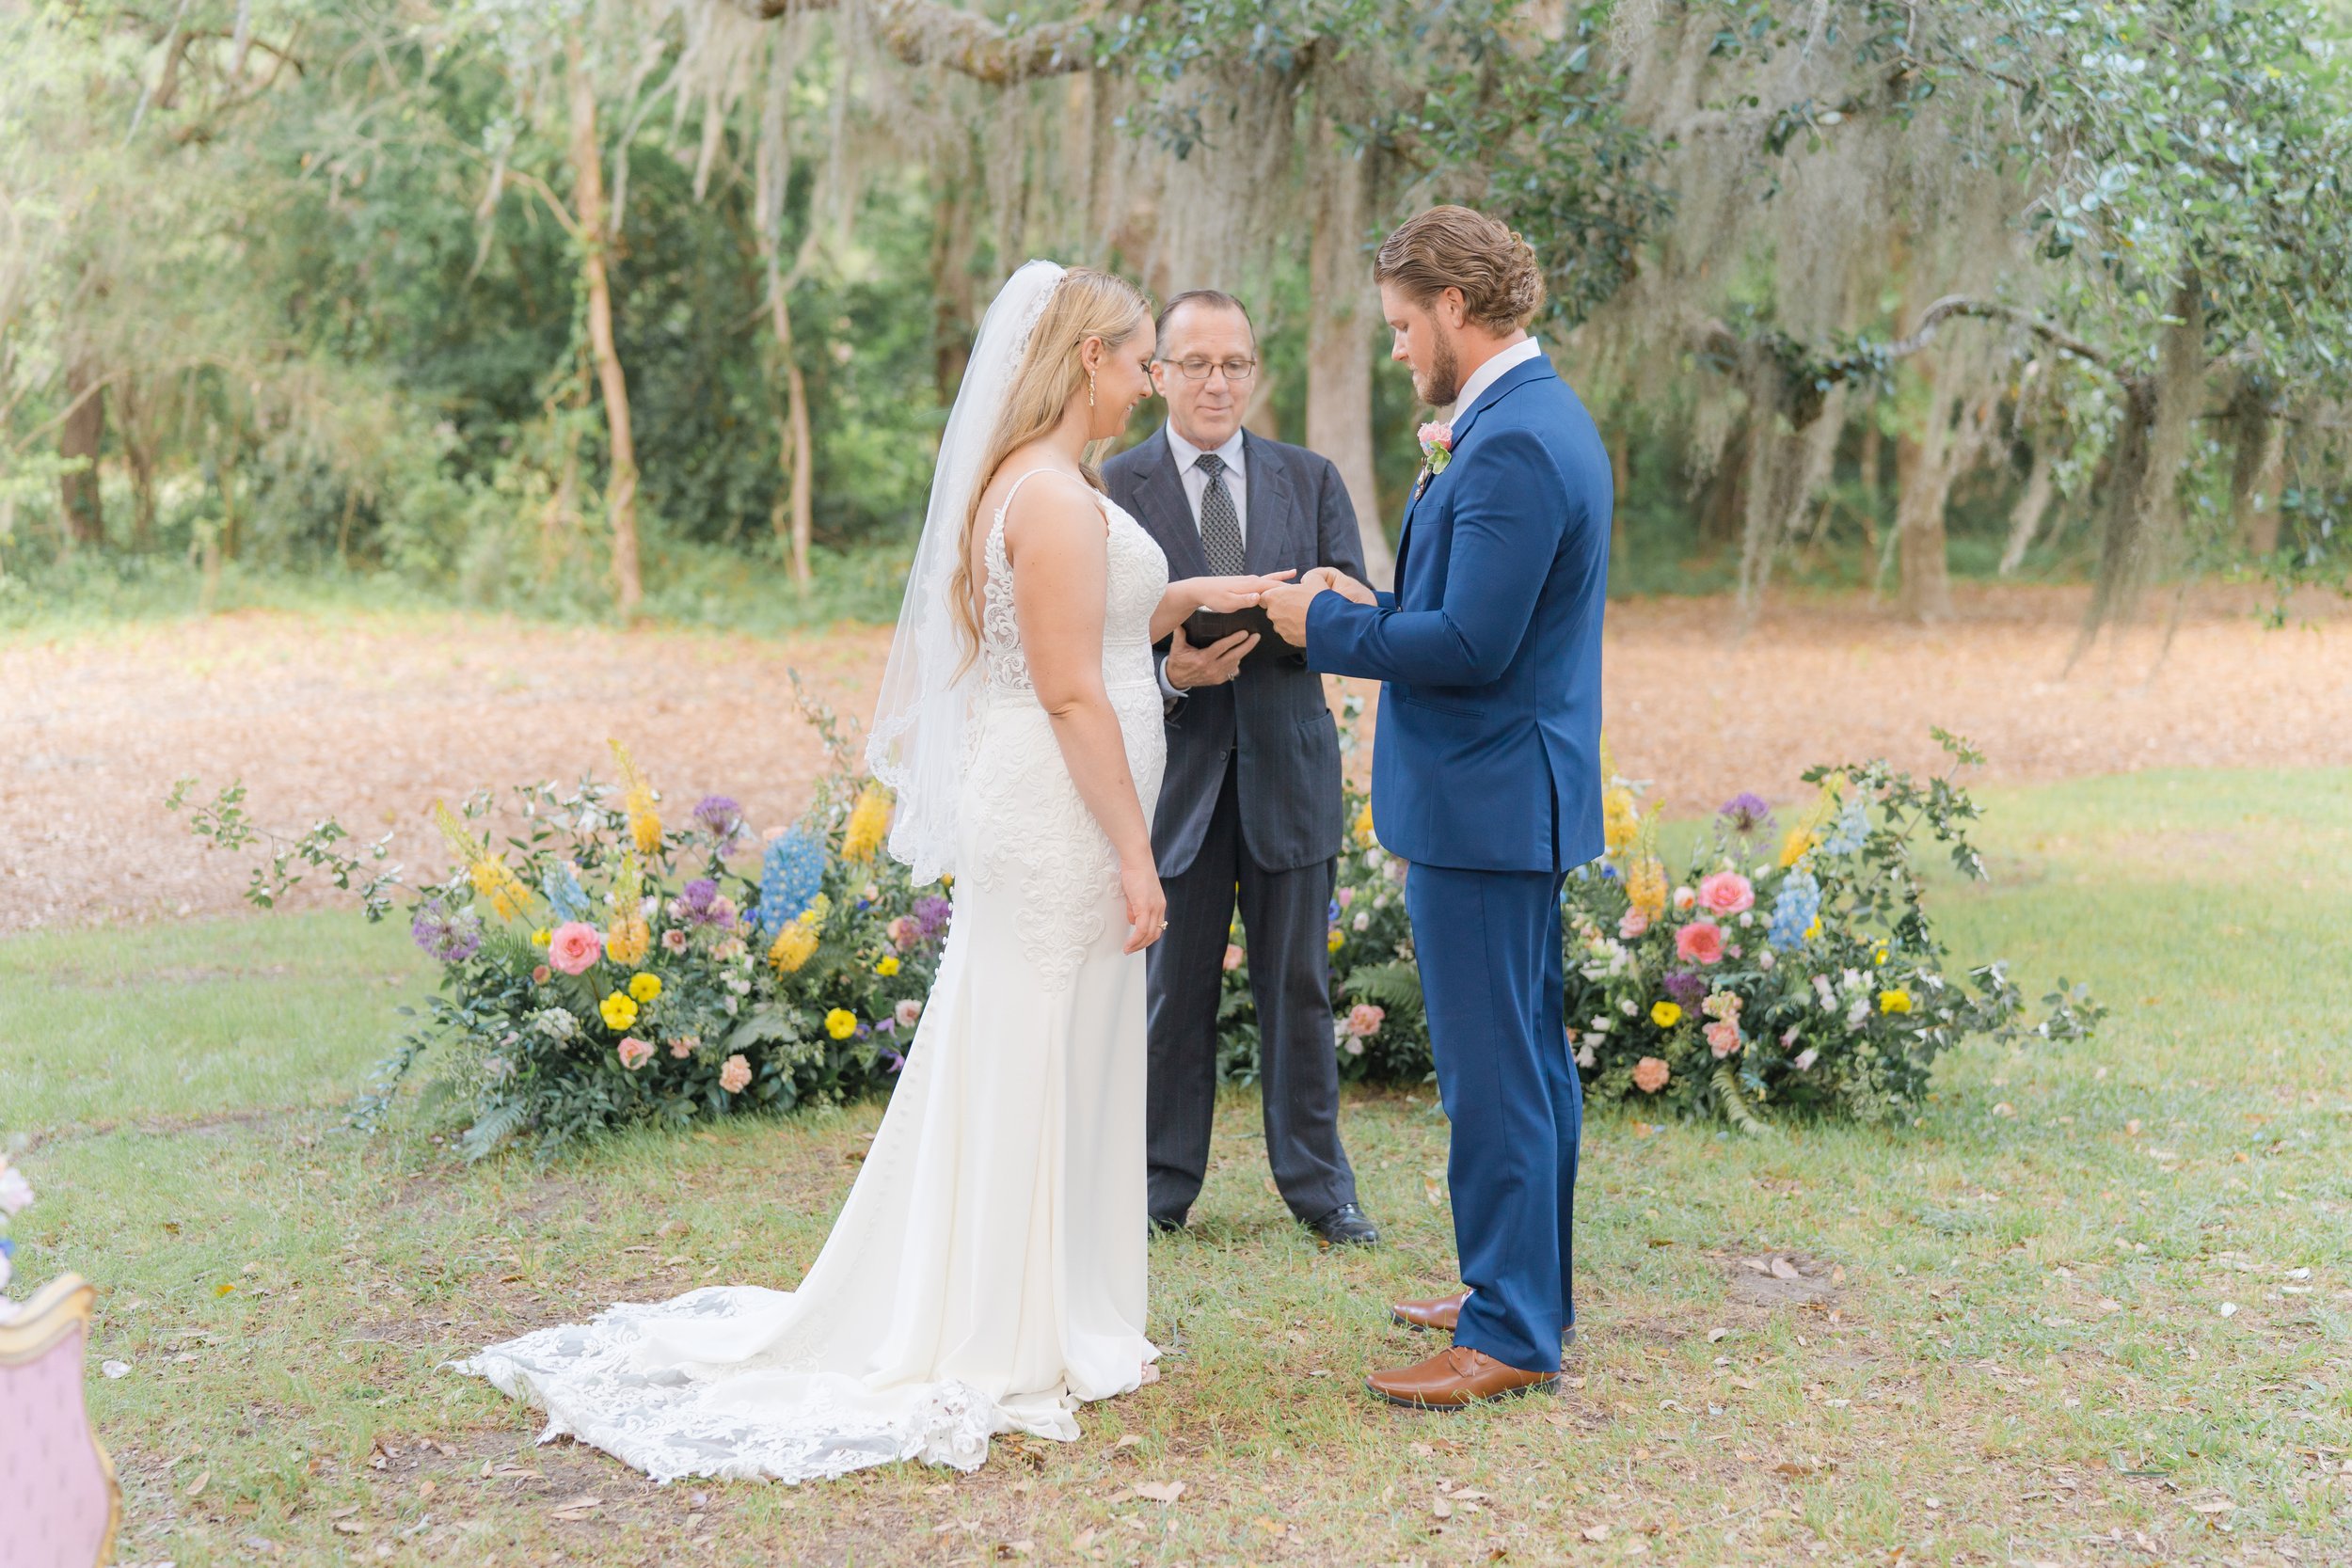 Groom puts ring on brides finger during wedding ceremony